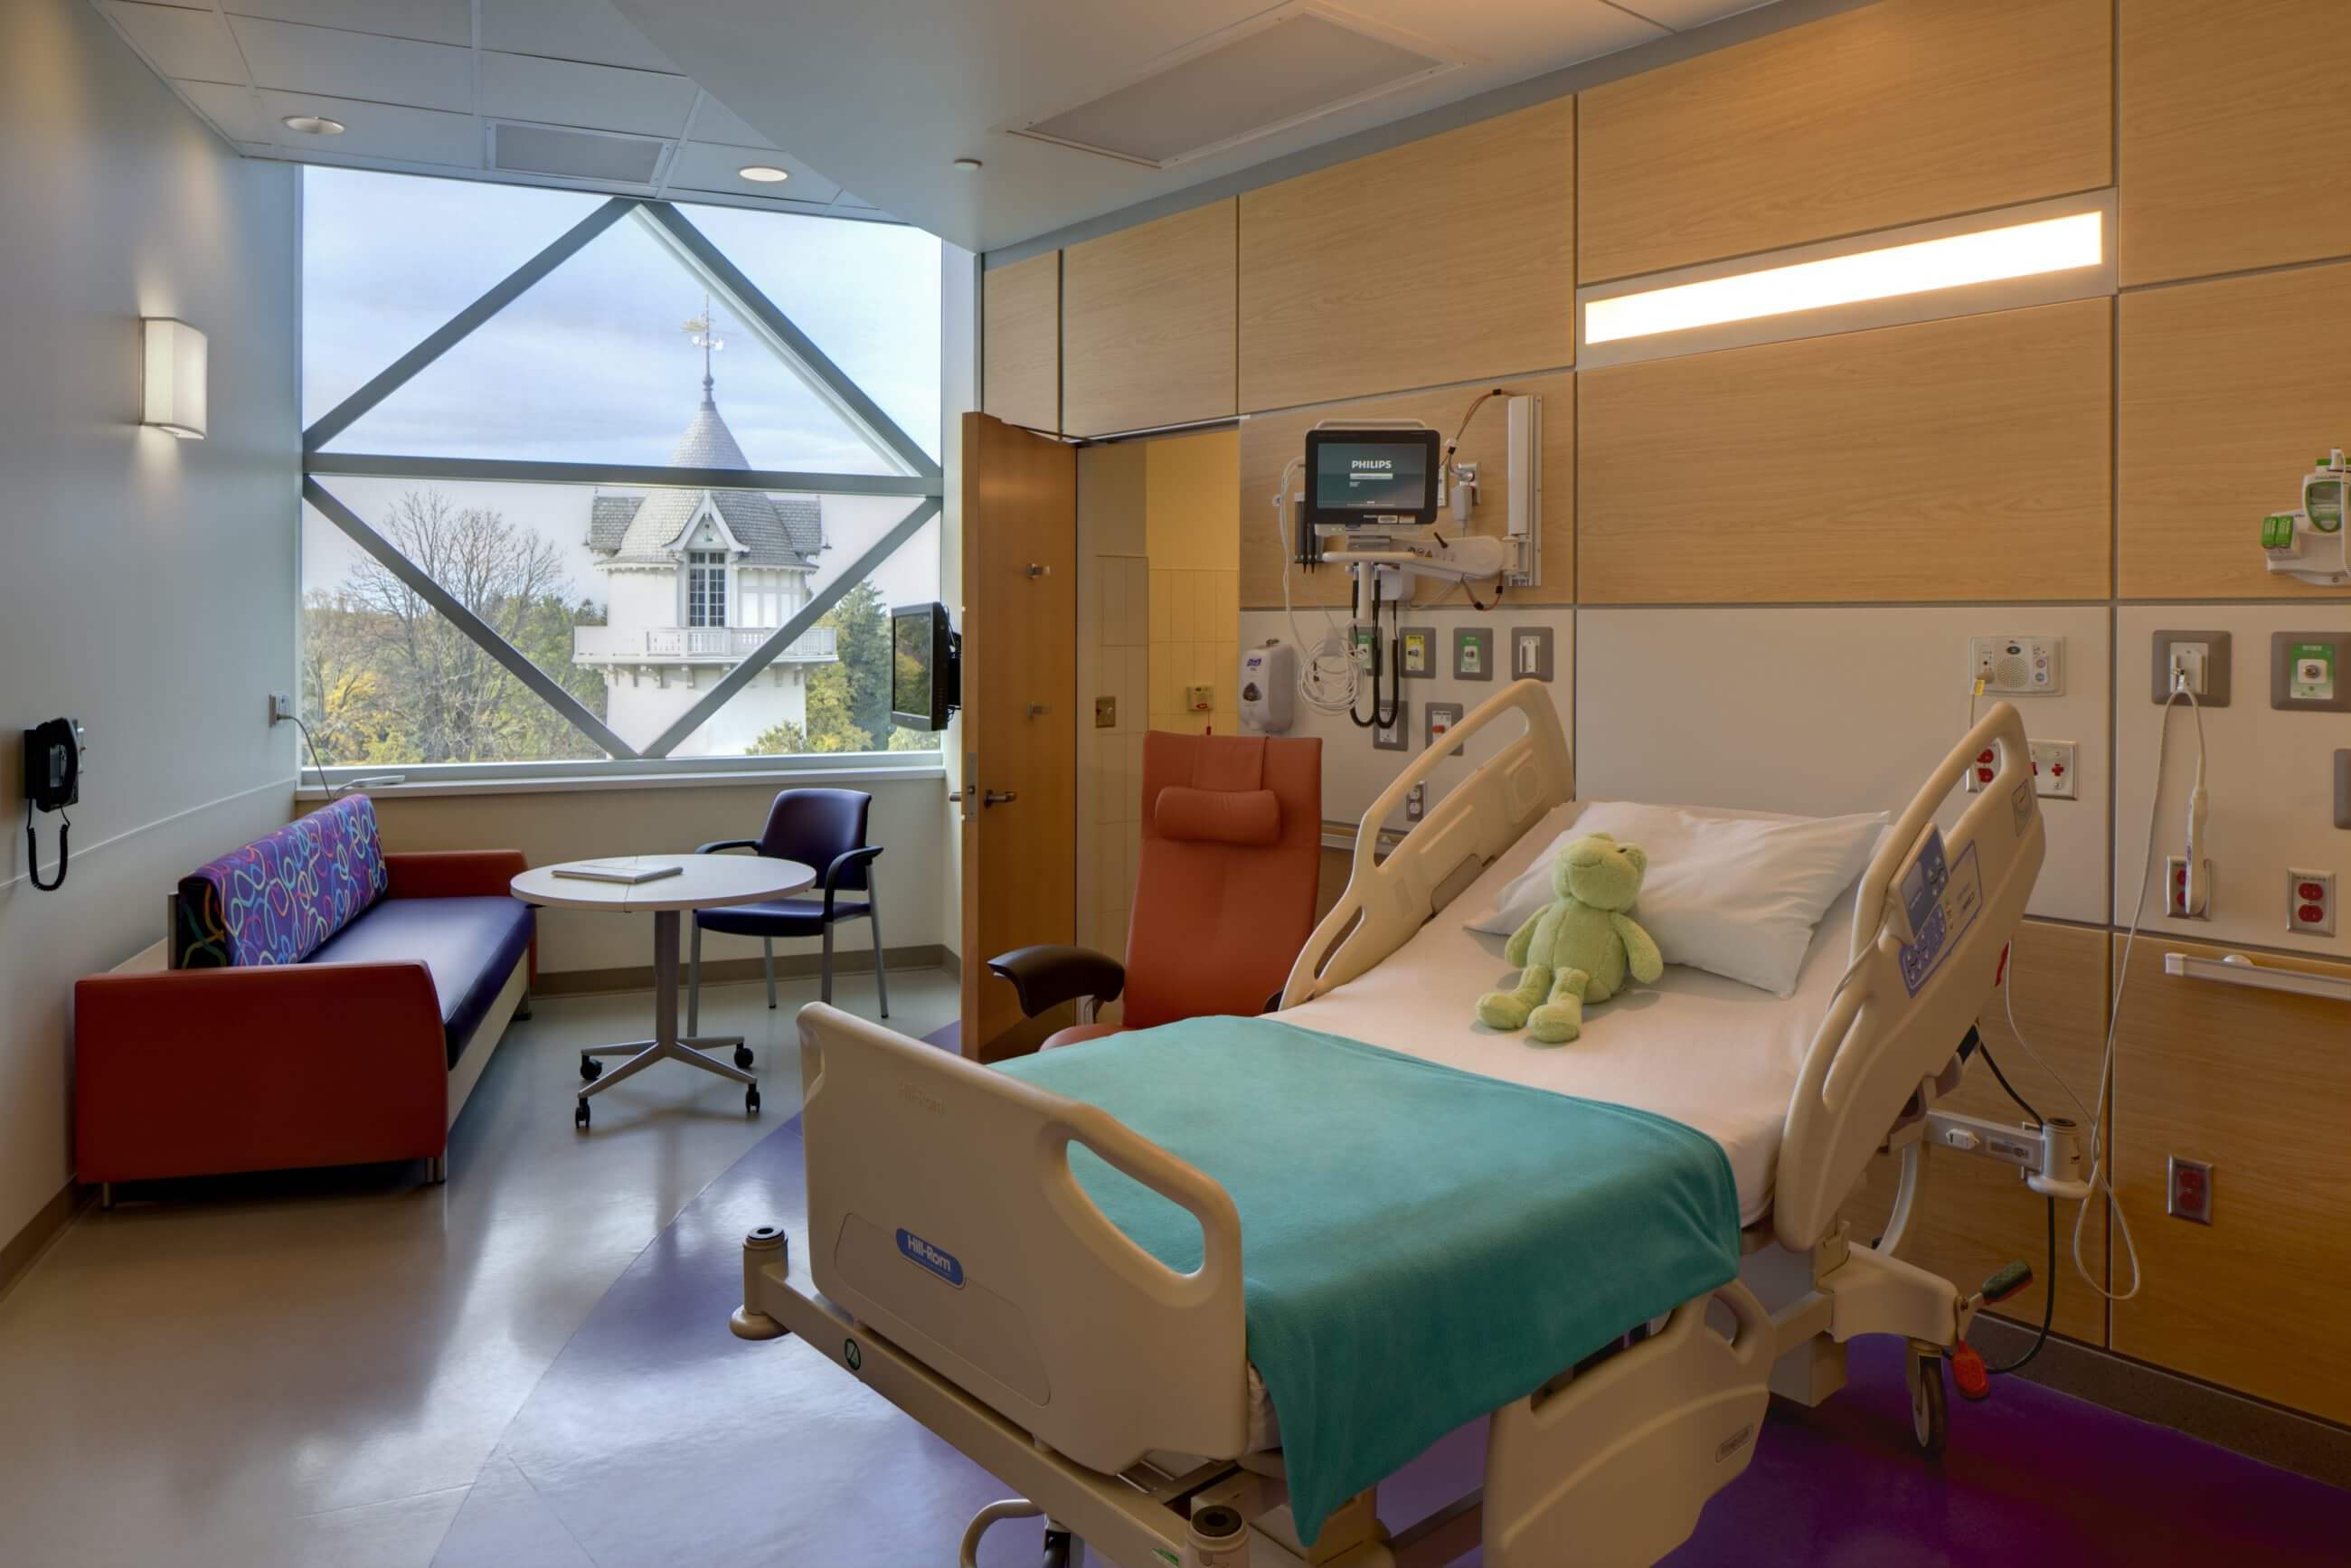 Nemours childrens hospital patient room